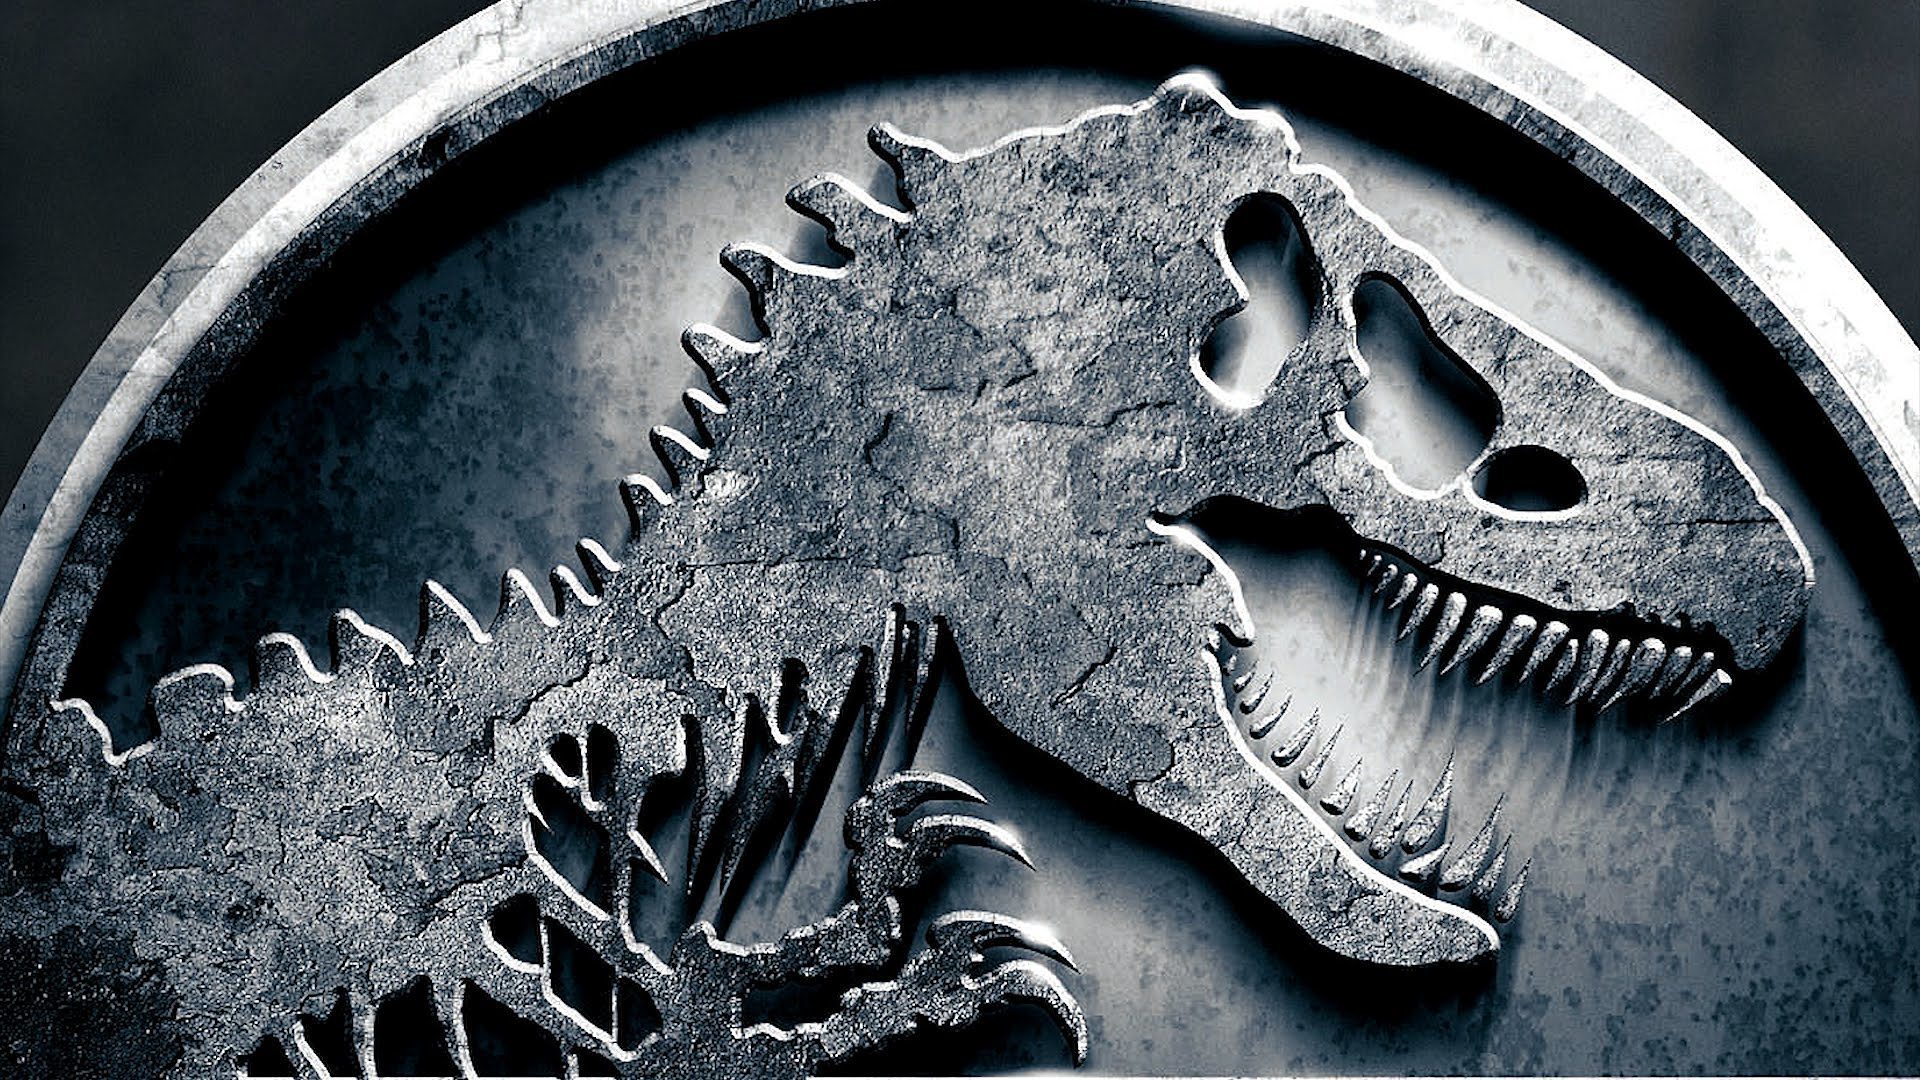 Movie Jurassic World HD Wallpaper | Background Image